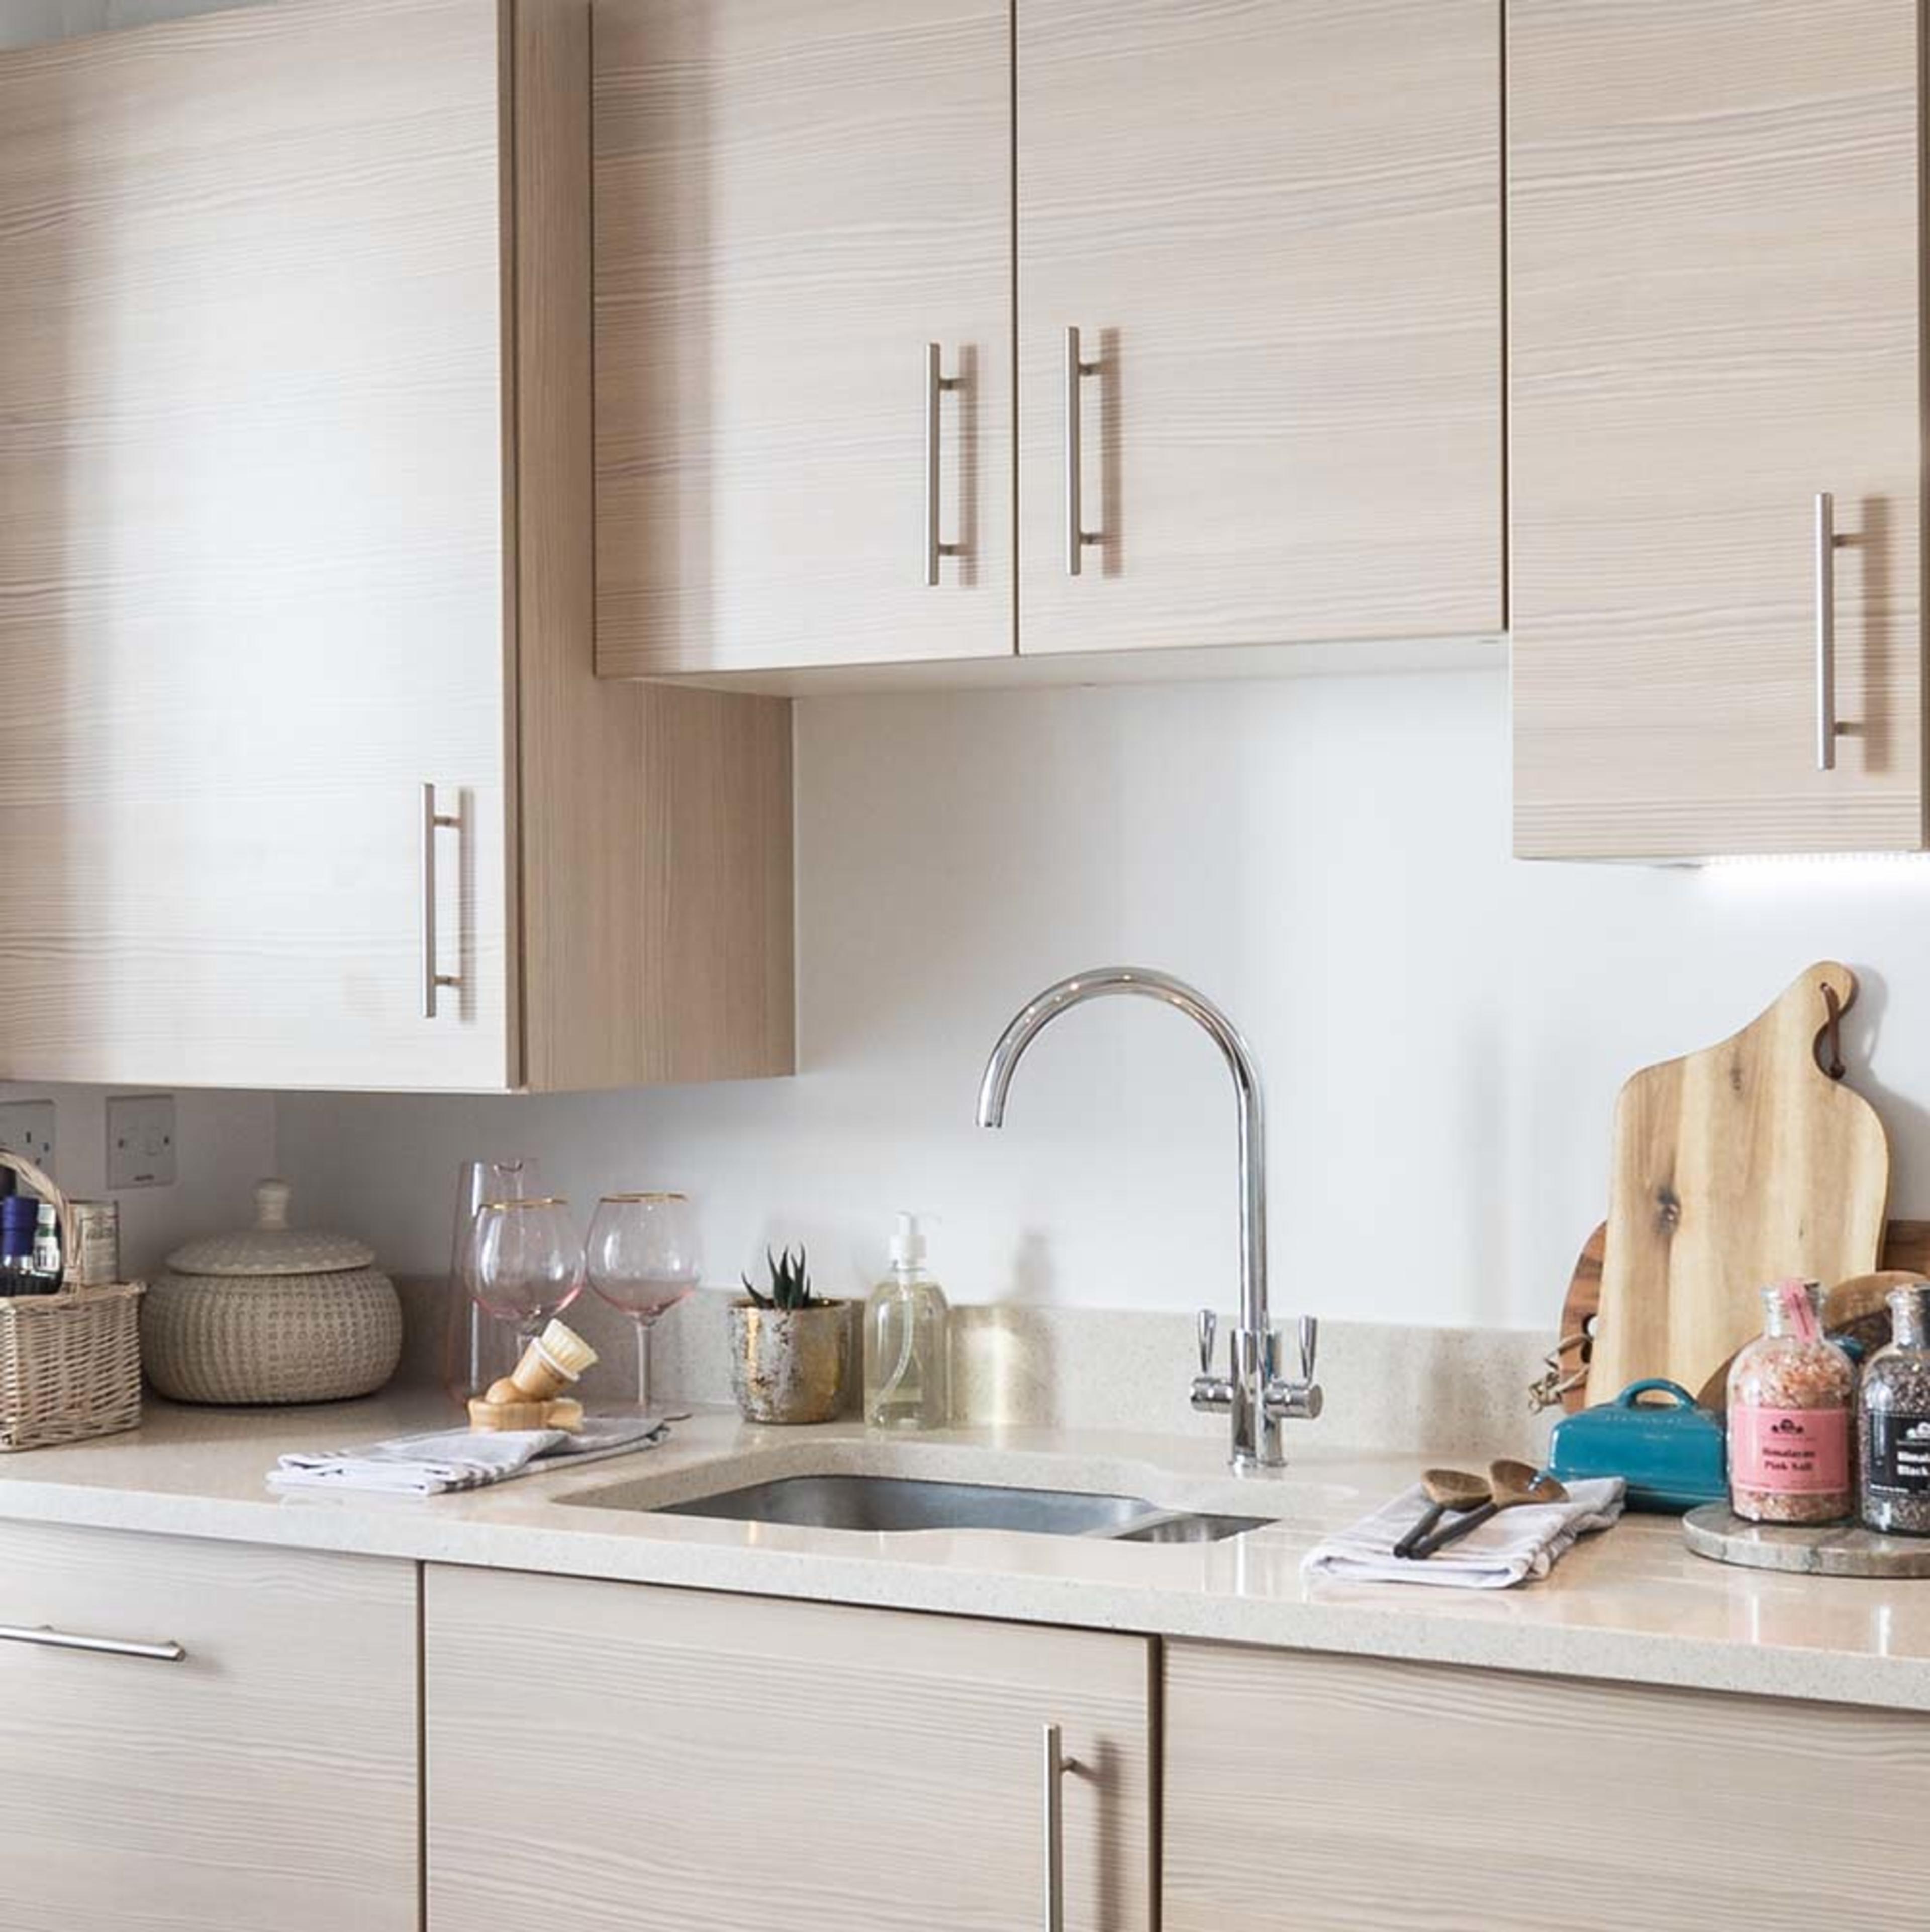 persona-homes-specification-kitchen-pale-wood-units-quartz-workstop-sink-tap